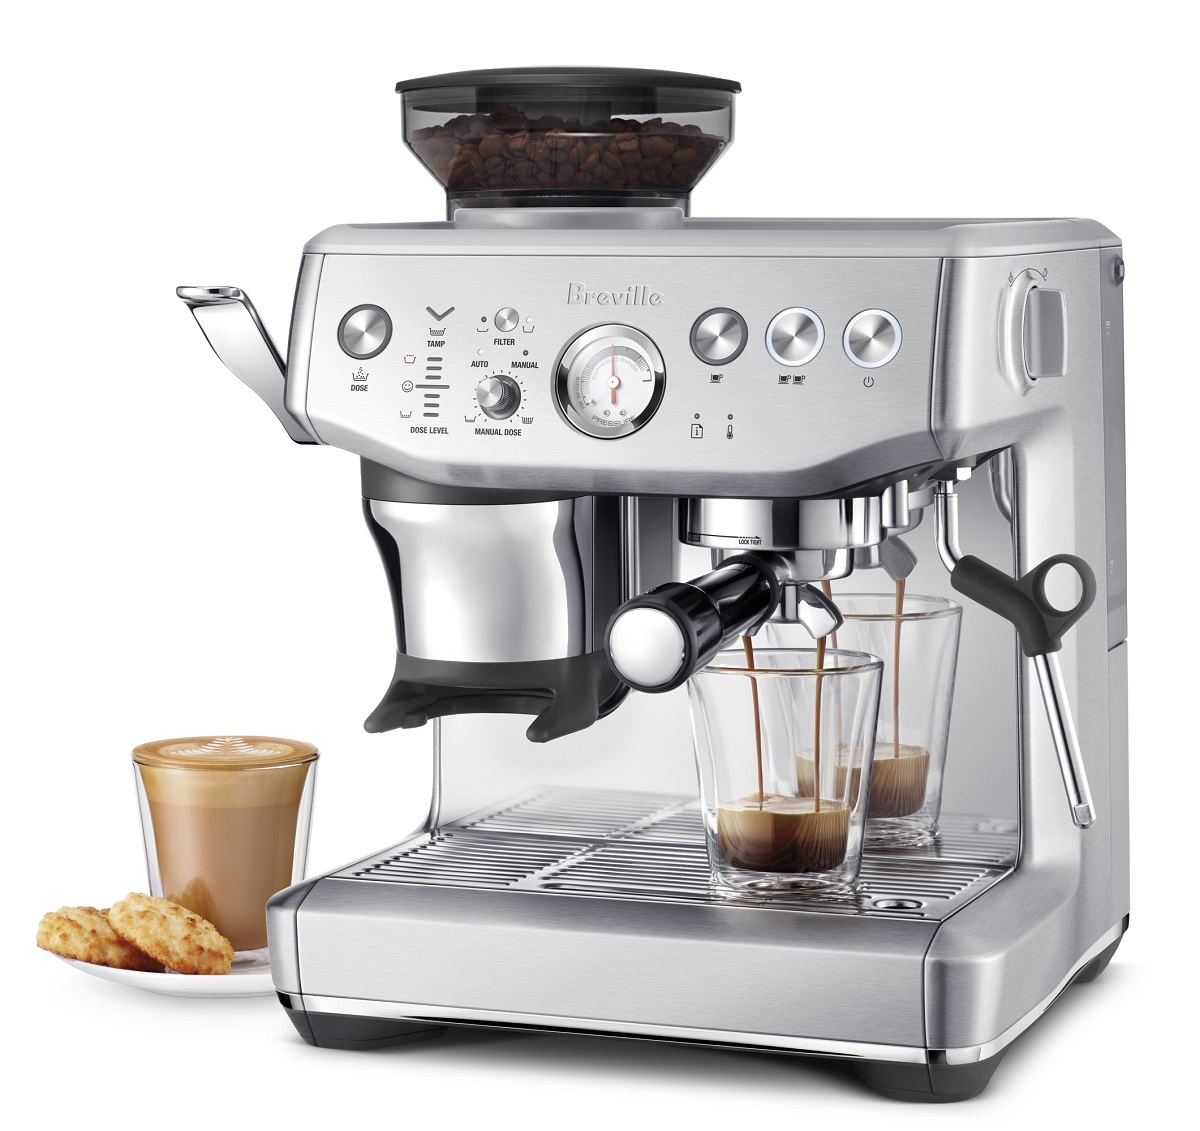 How To Use The Breville Espresso Machine